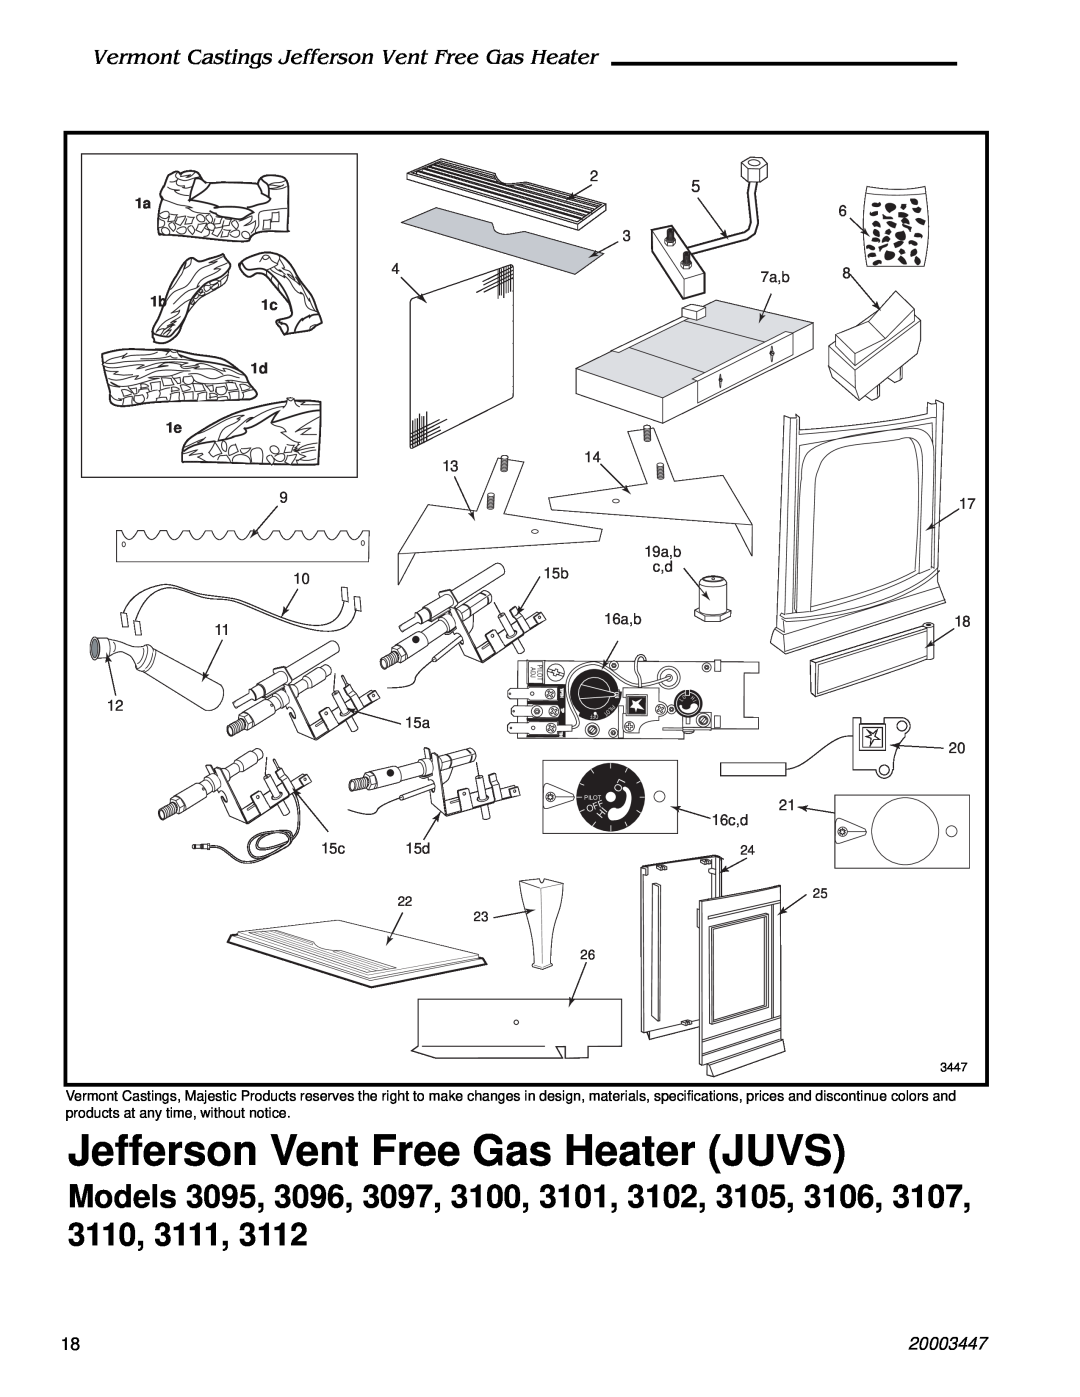 Vermont Casting JUVSR 3096, JUVSM 3096 Jefferson Vent Free Gas Heater JUVS, 20003447, 7a,b, 19a,b, 16a,b, 16c,d 